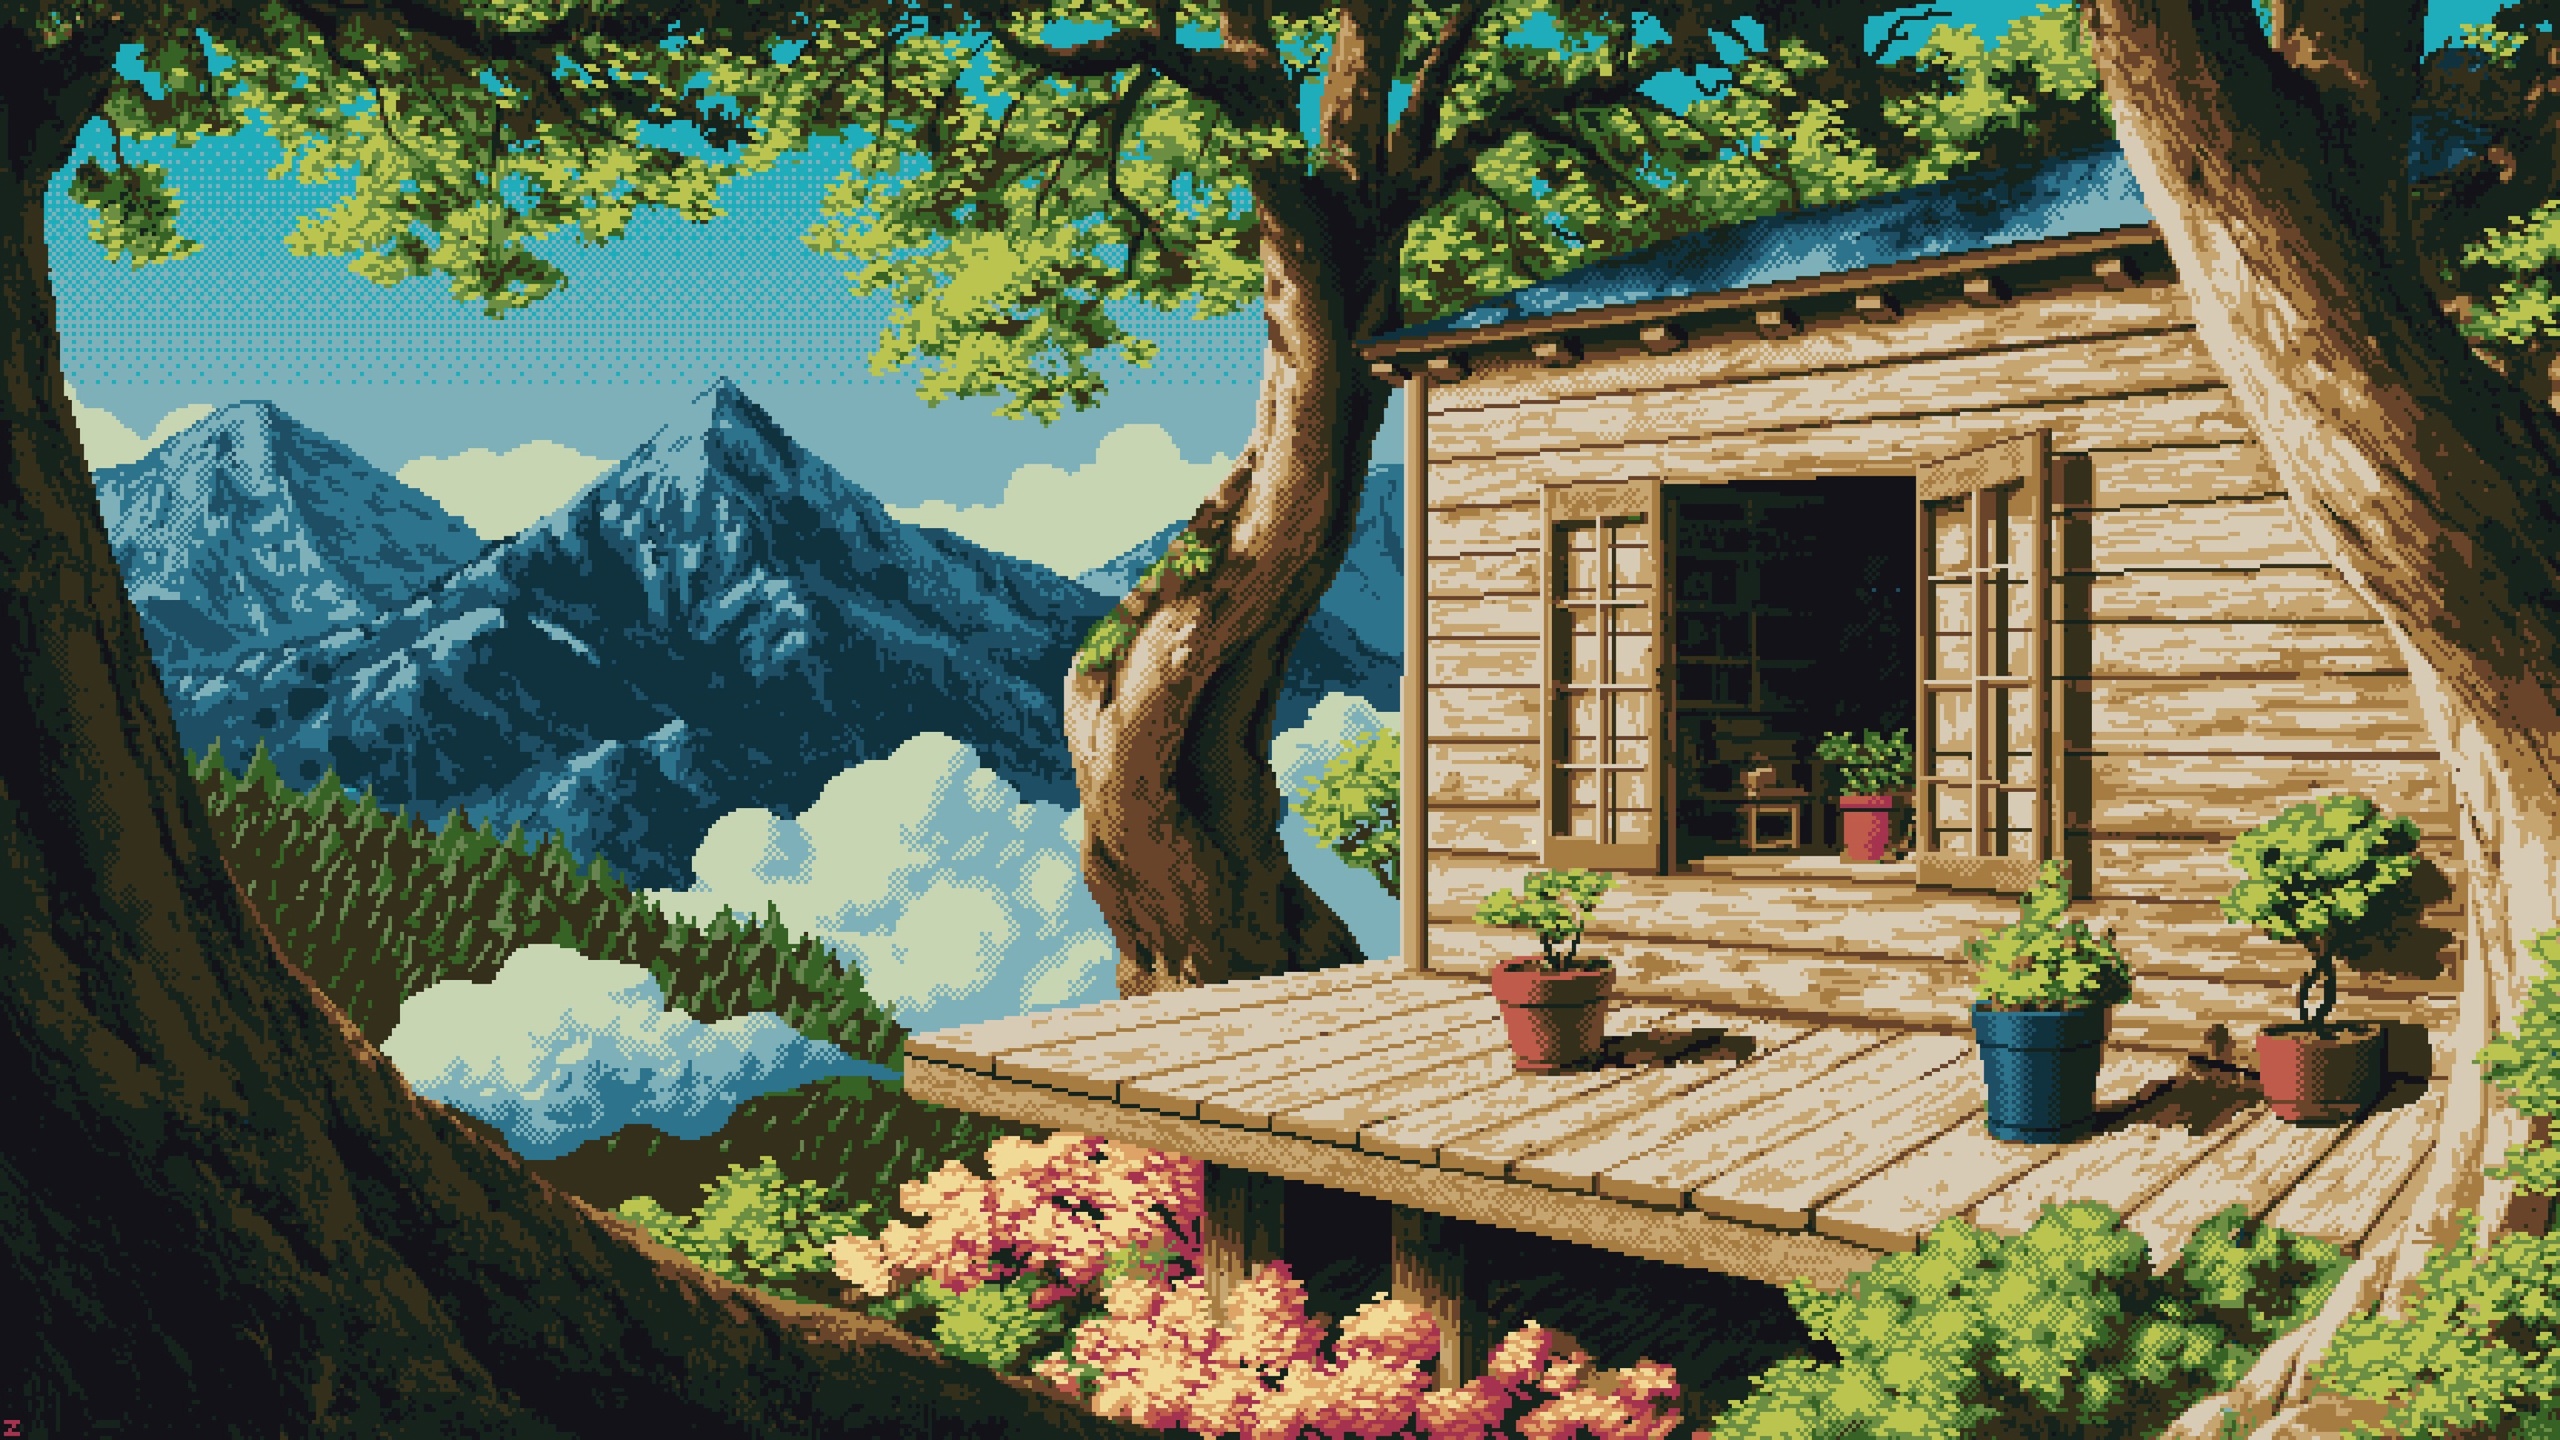 General 2560x1440 pixel art digital art mountains window plants sky clouds nature trees wood house